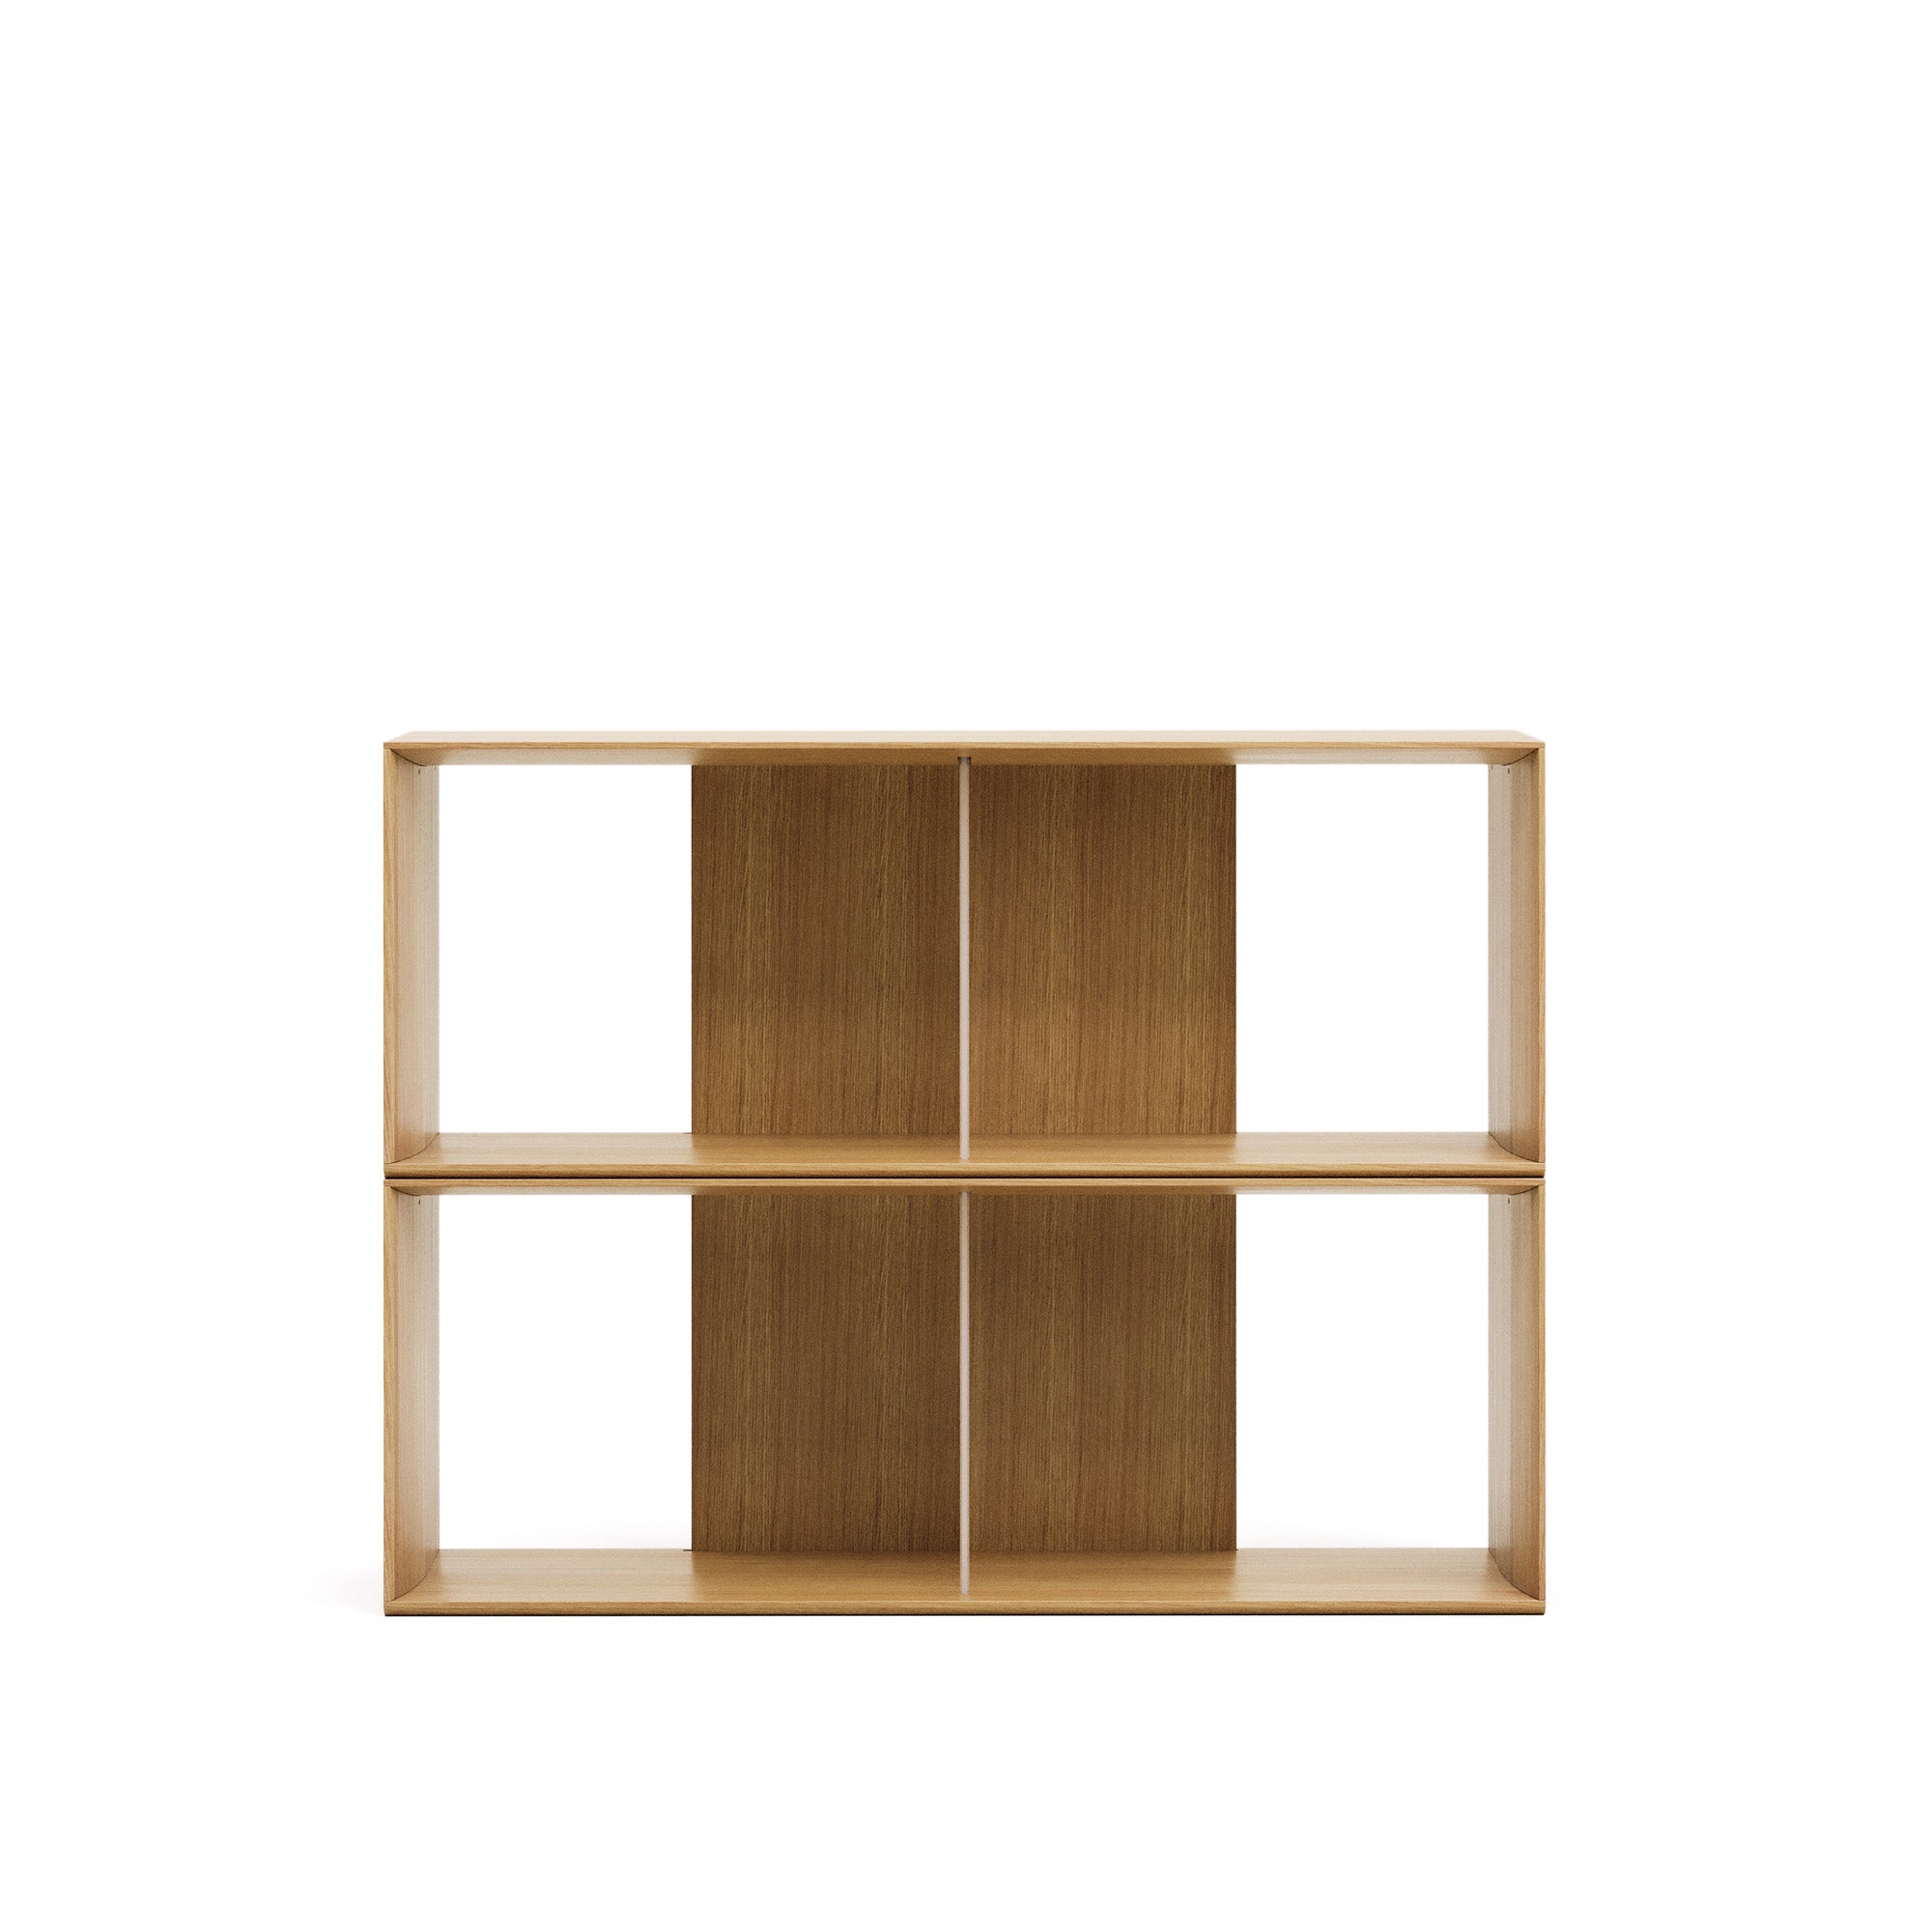 Litto set of 2 modular shelving units in oak wood veneer, 101 x 76 cm